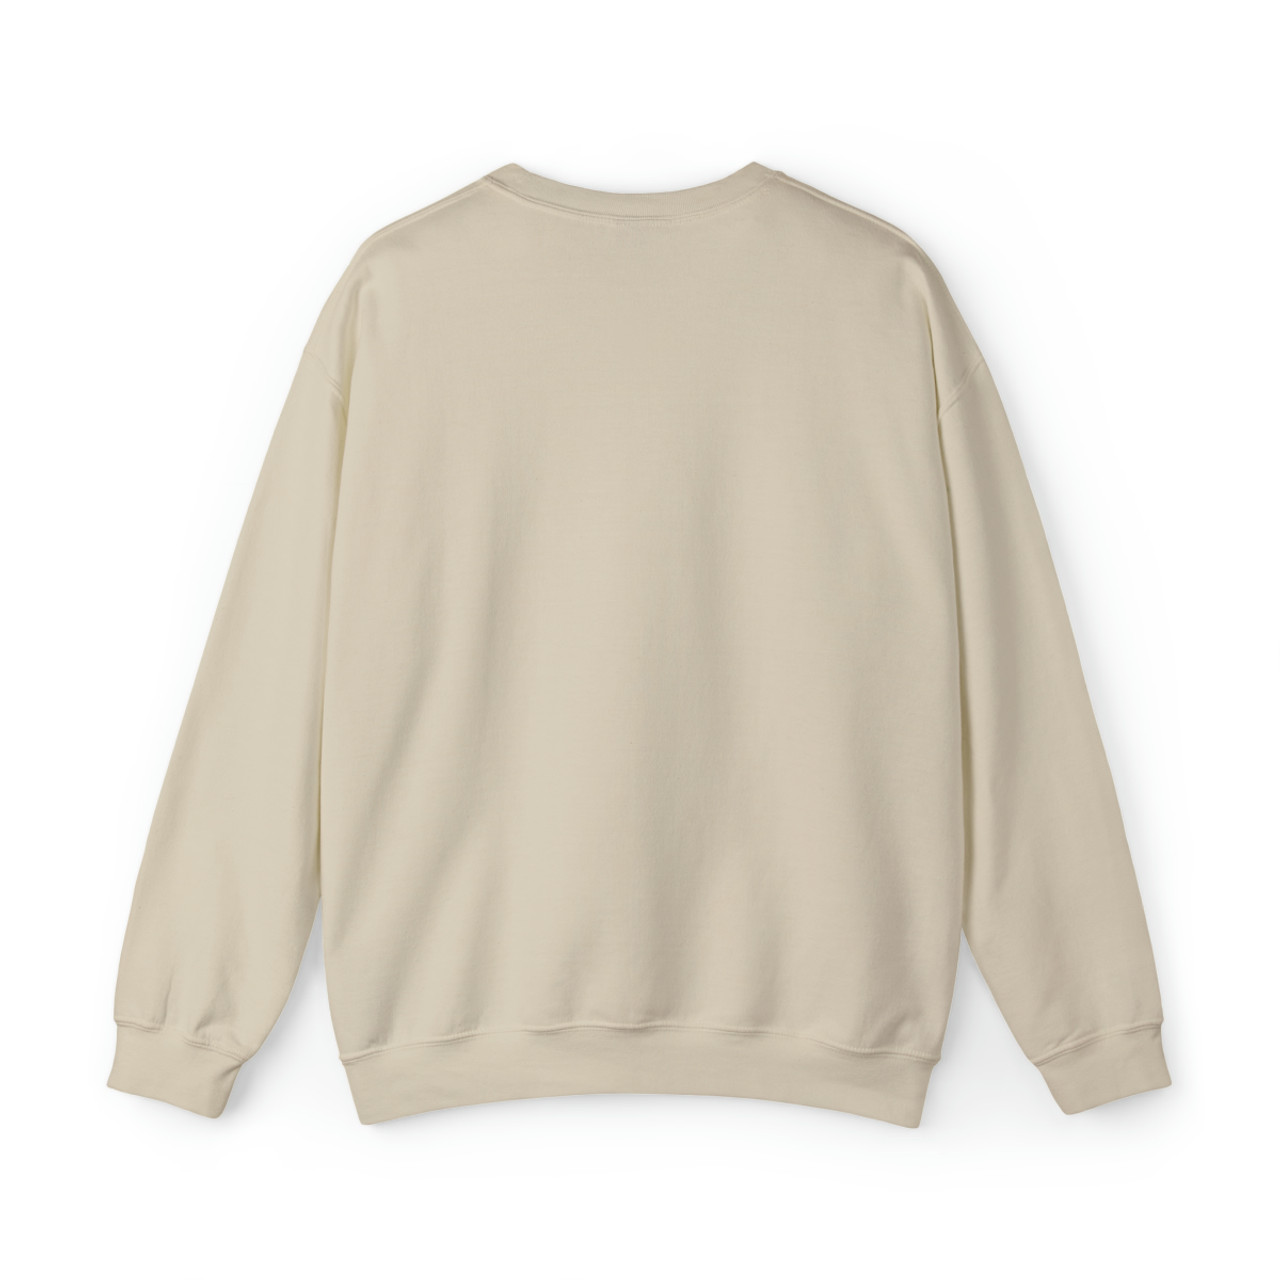 BARI Crewneck Sweatshirt- Multiple Colors